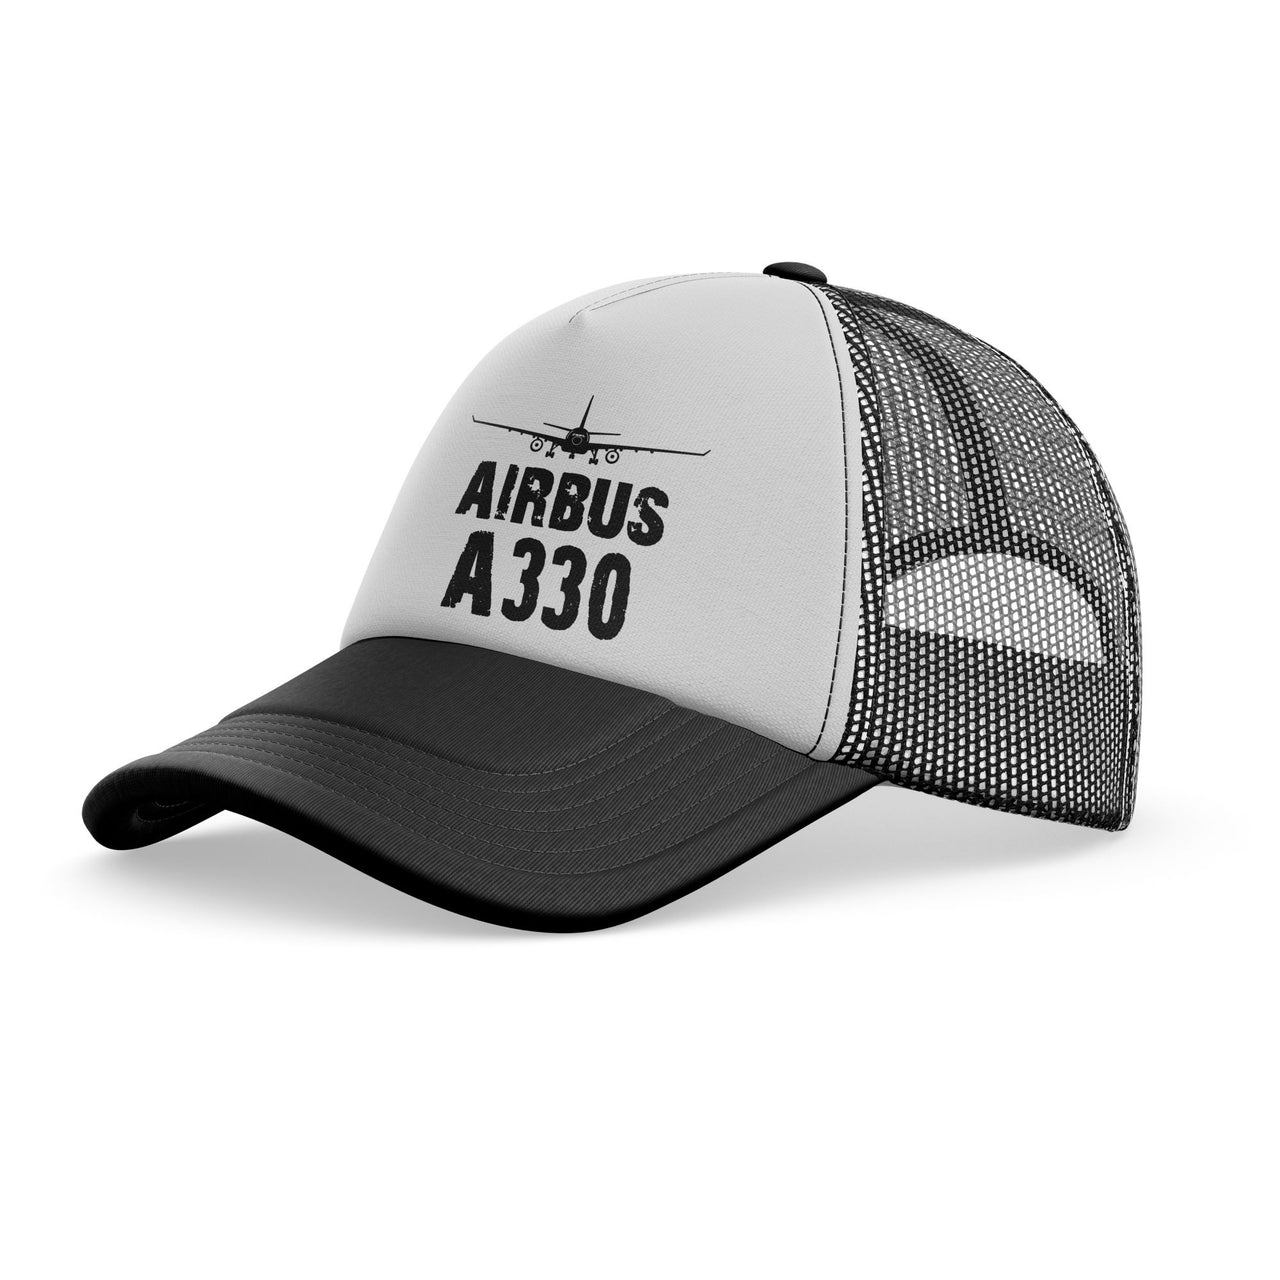 Airbus A330 & Plane Designed Trucker Caps & Hats